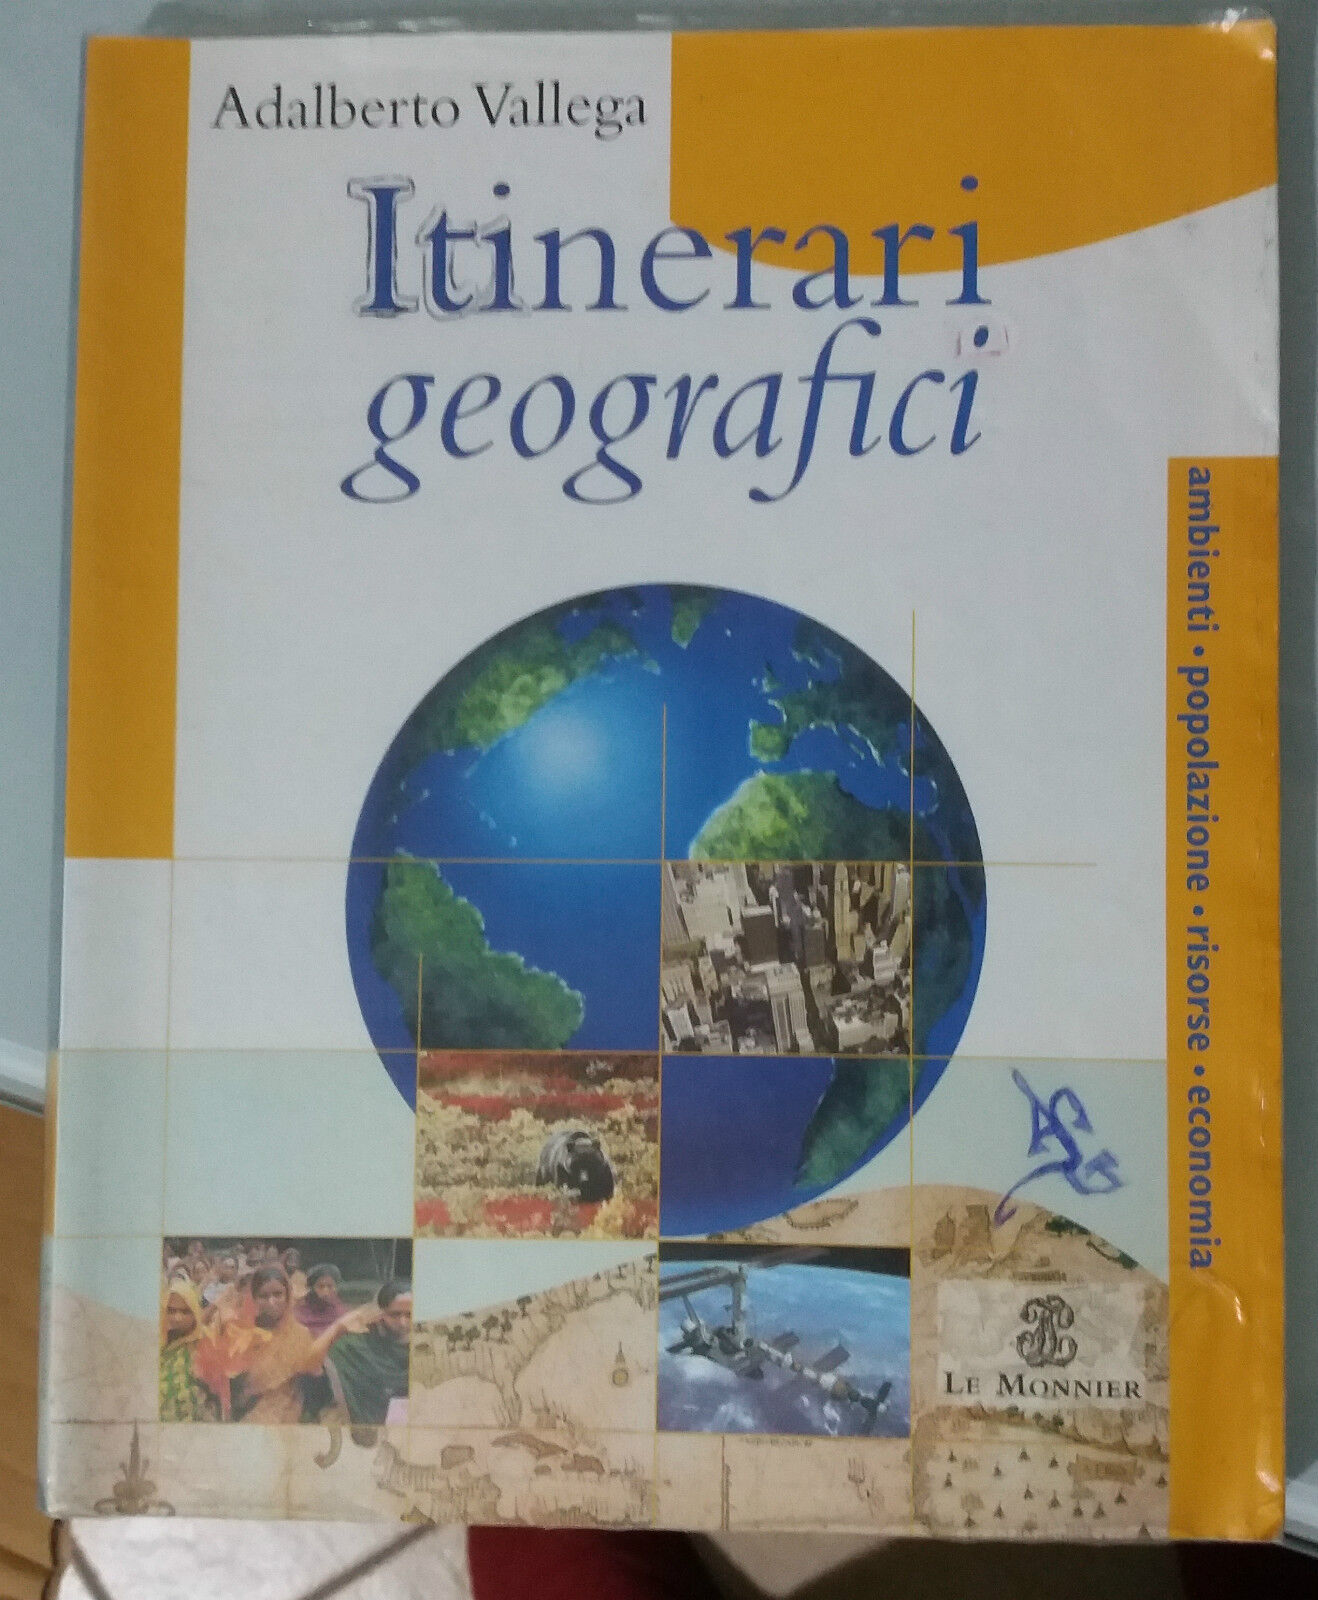 Itinerari geografici - Adalberto Vallega - Le Monnier - 2005